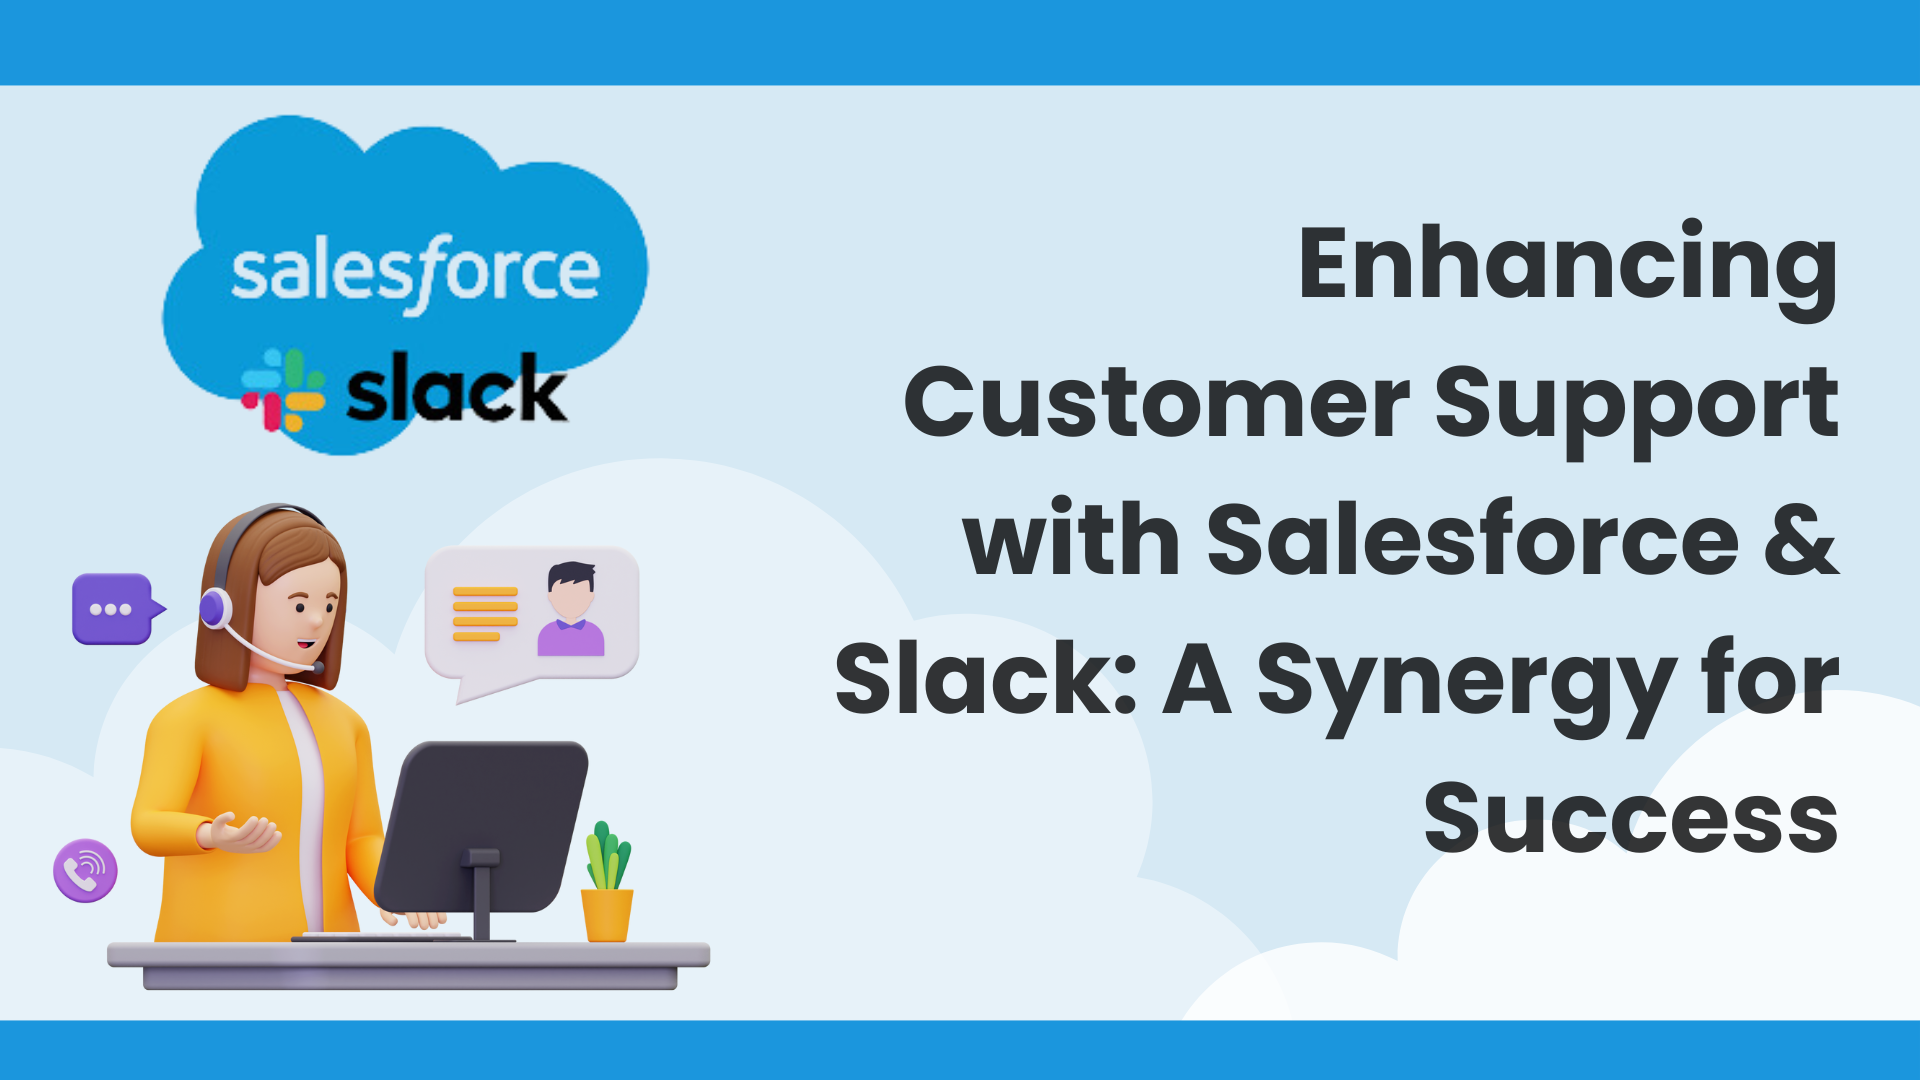 Enhancing Customer Support with Salesforce & Slack